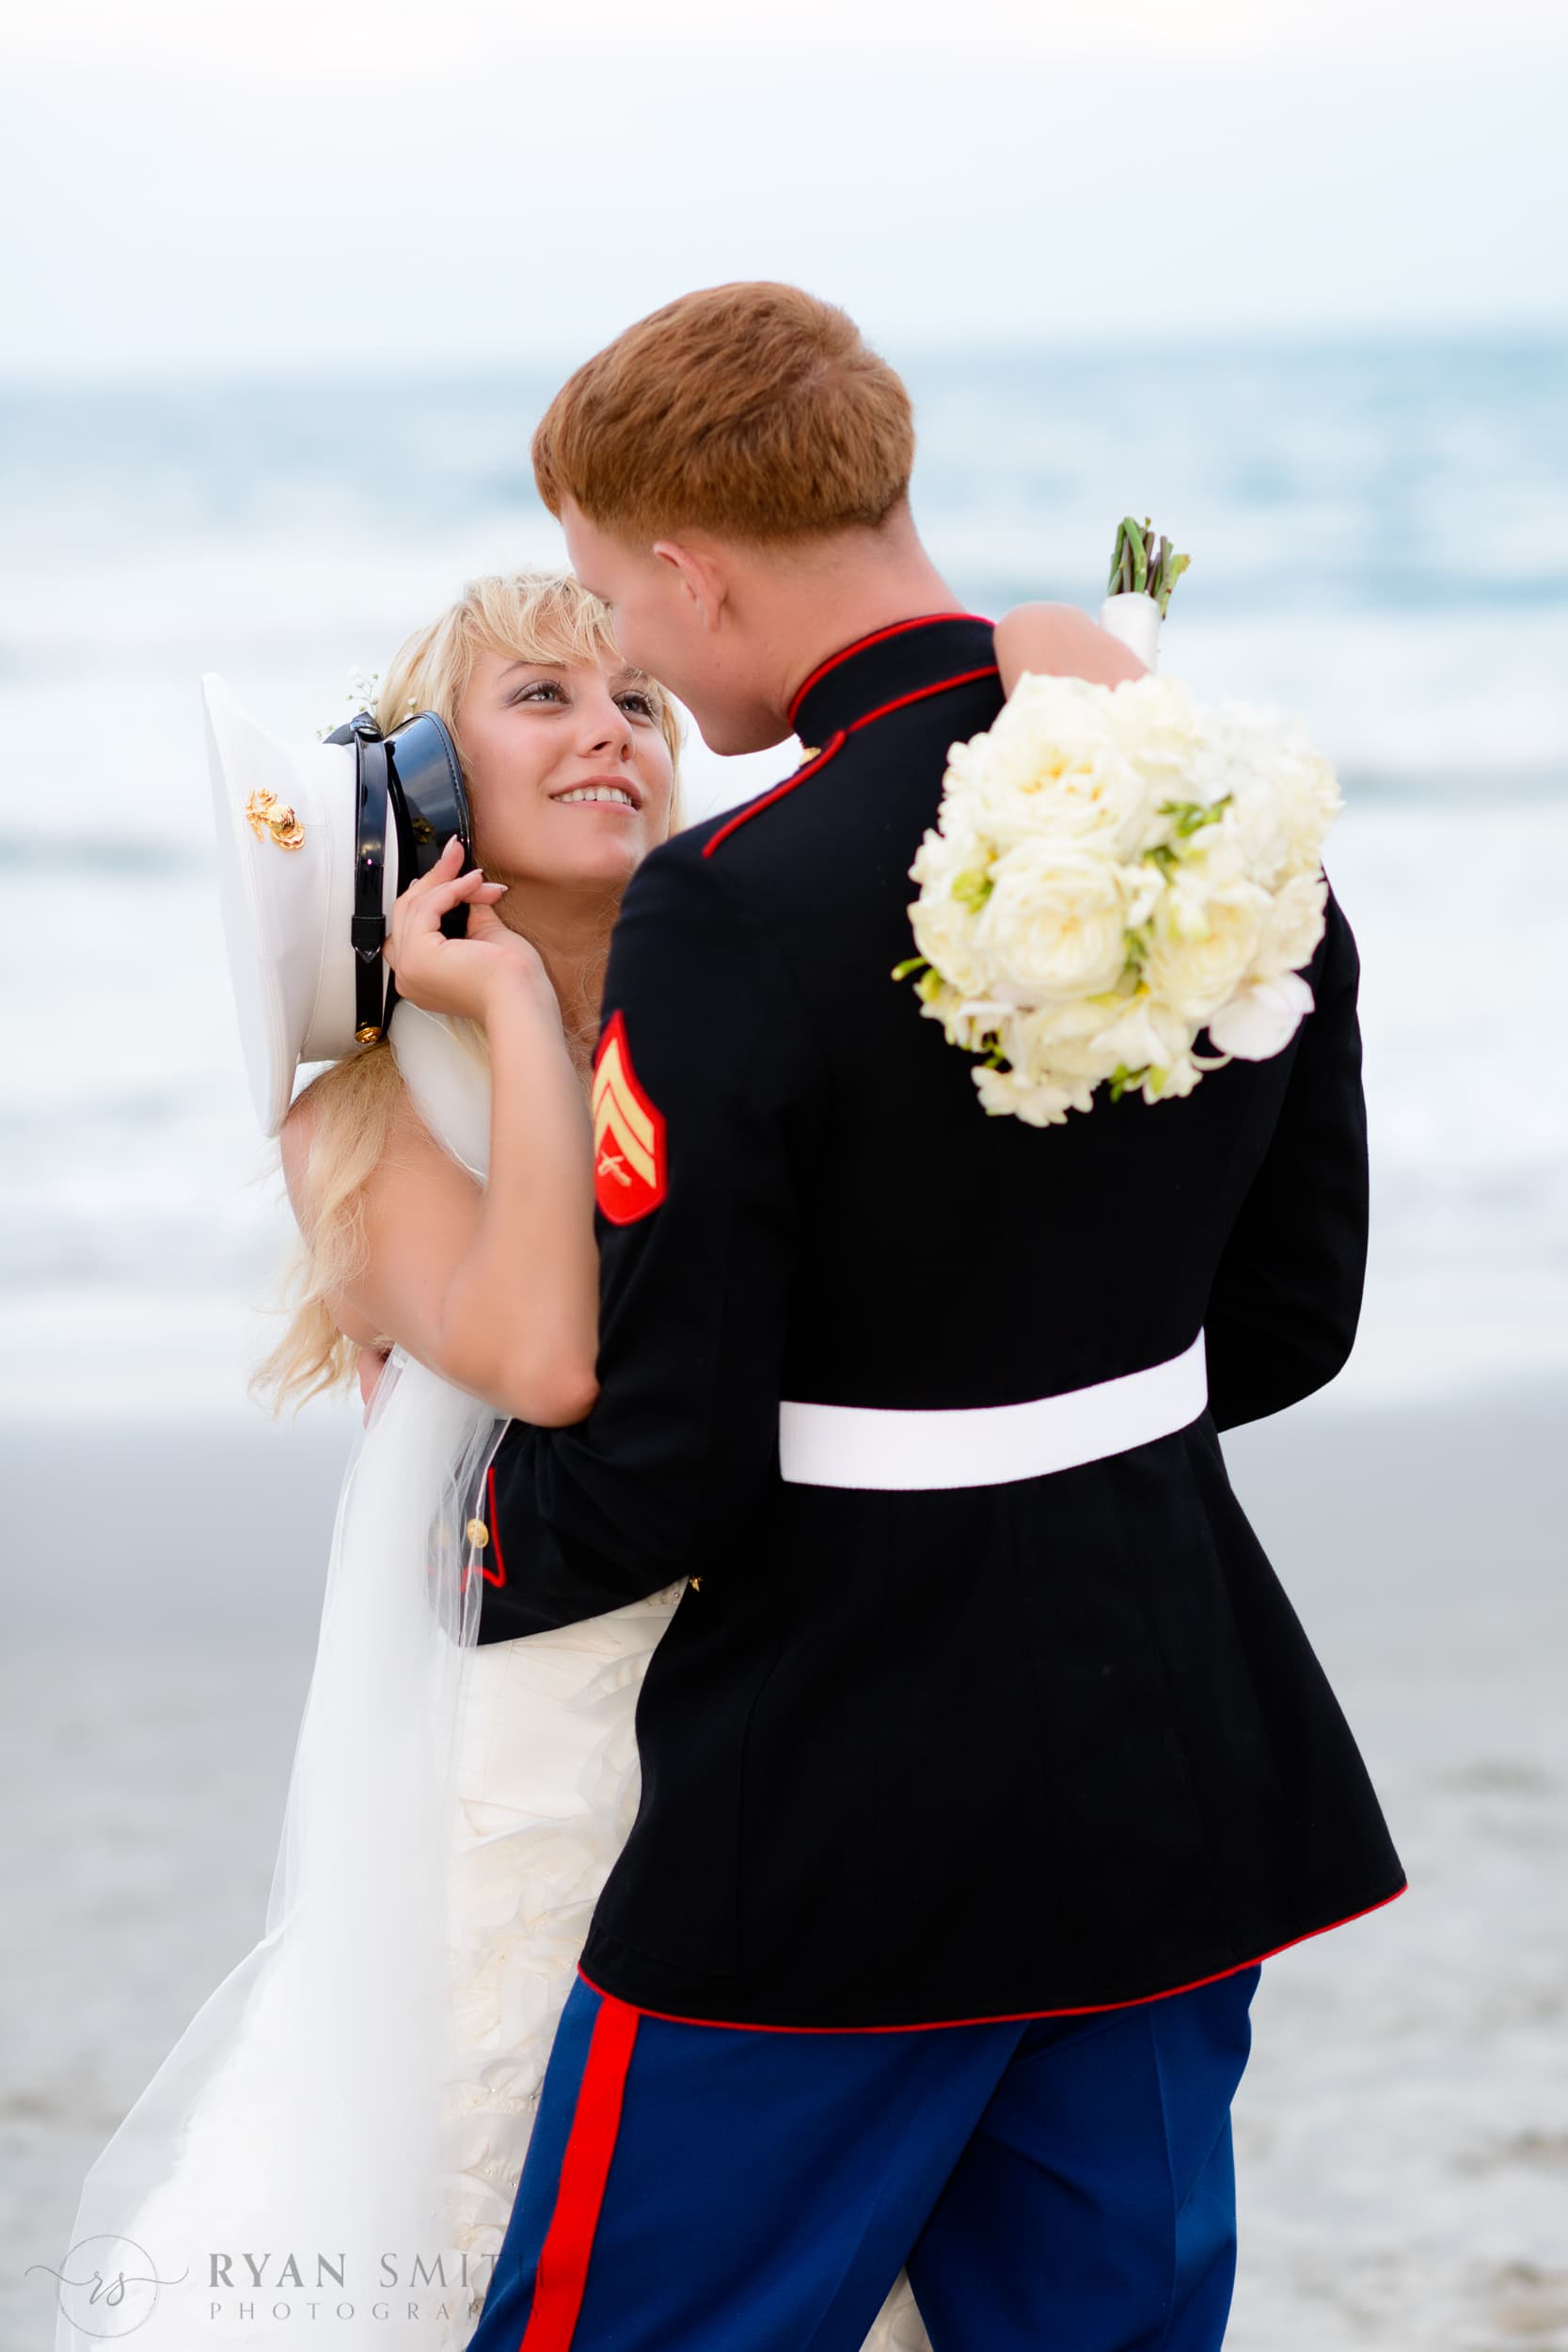 Bride looking up at groom in military uniform -